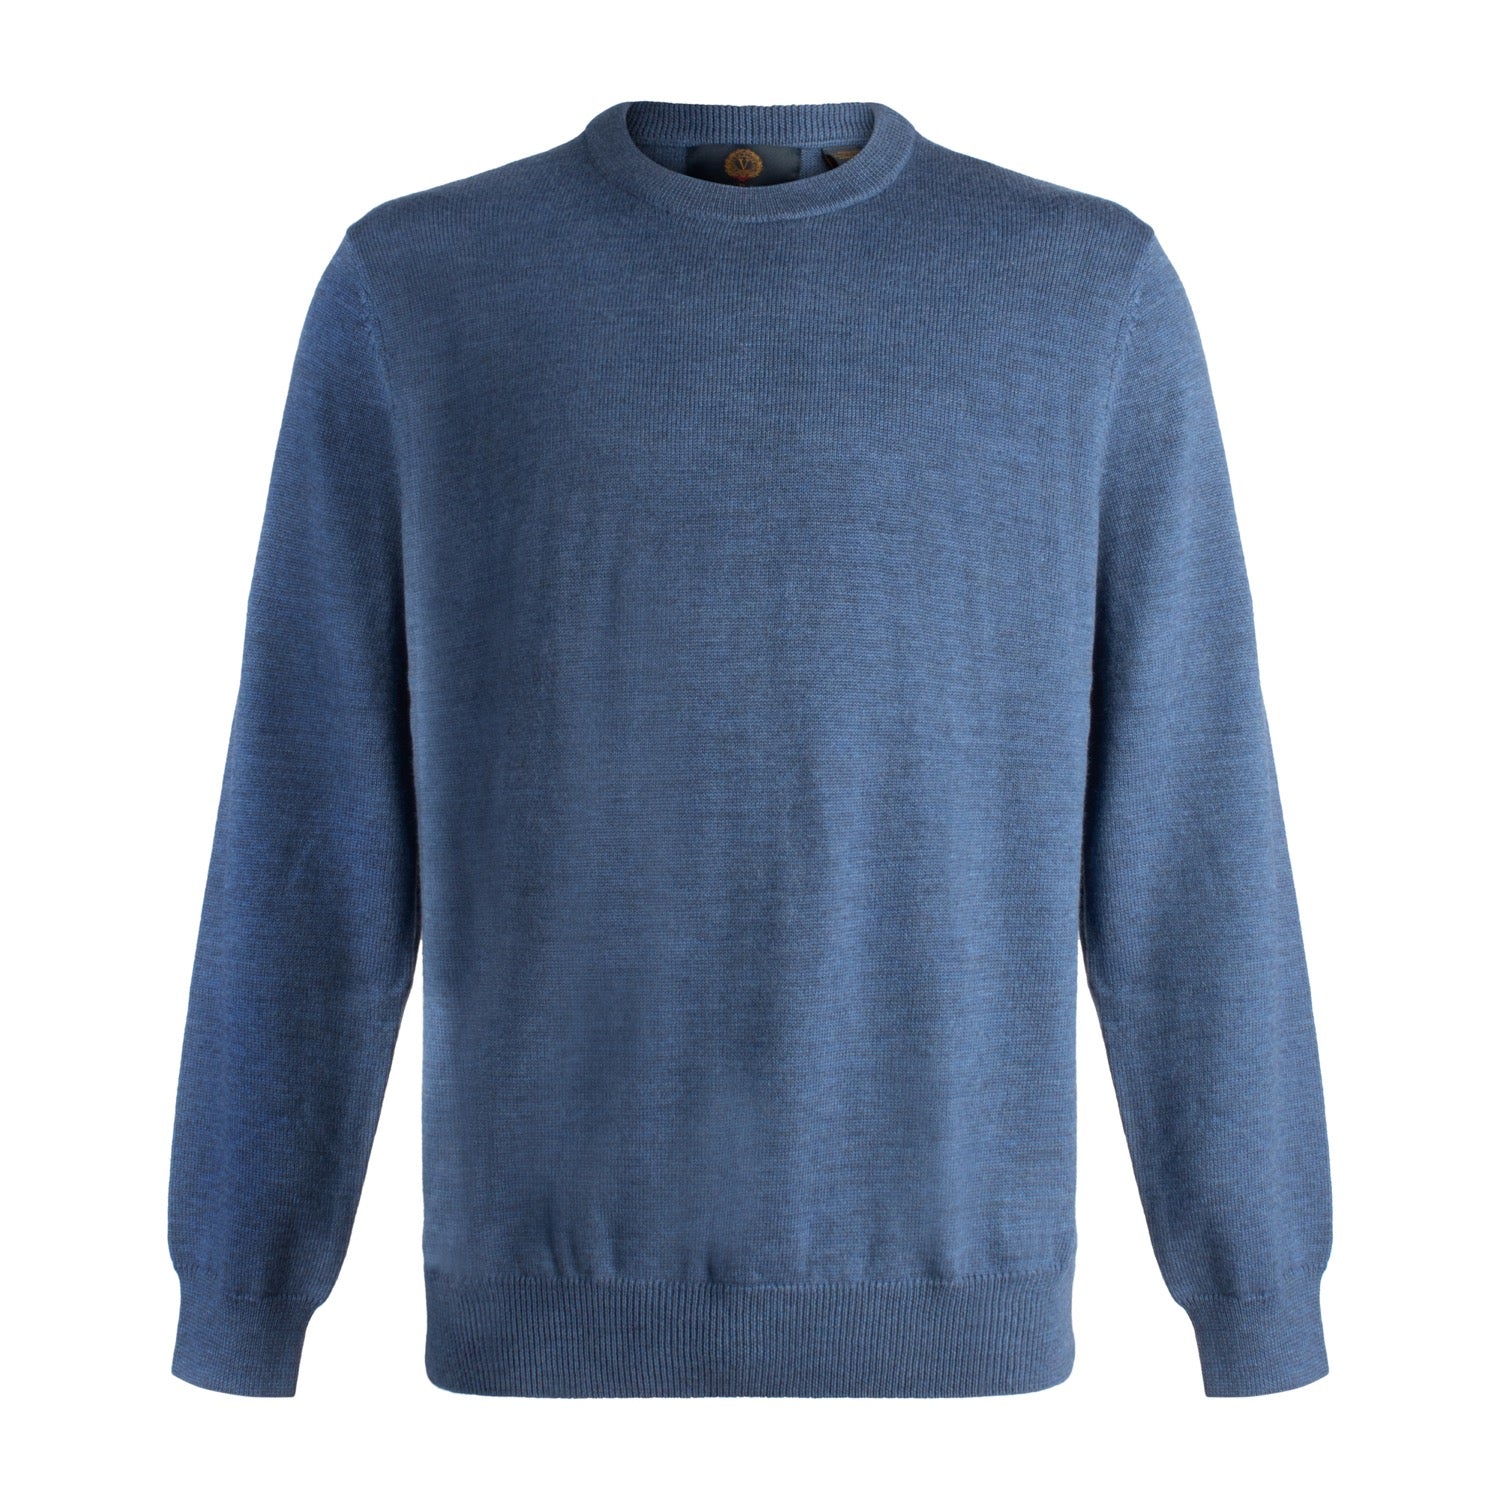 Extra Fine 'Zegna Baruffa' Merino Wool Crew Neck Sweater in Indigo by Viyella